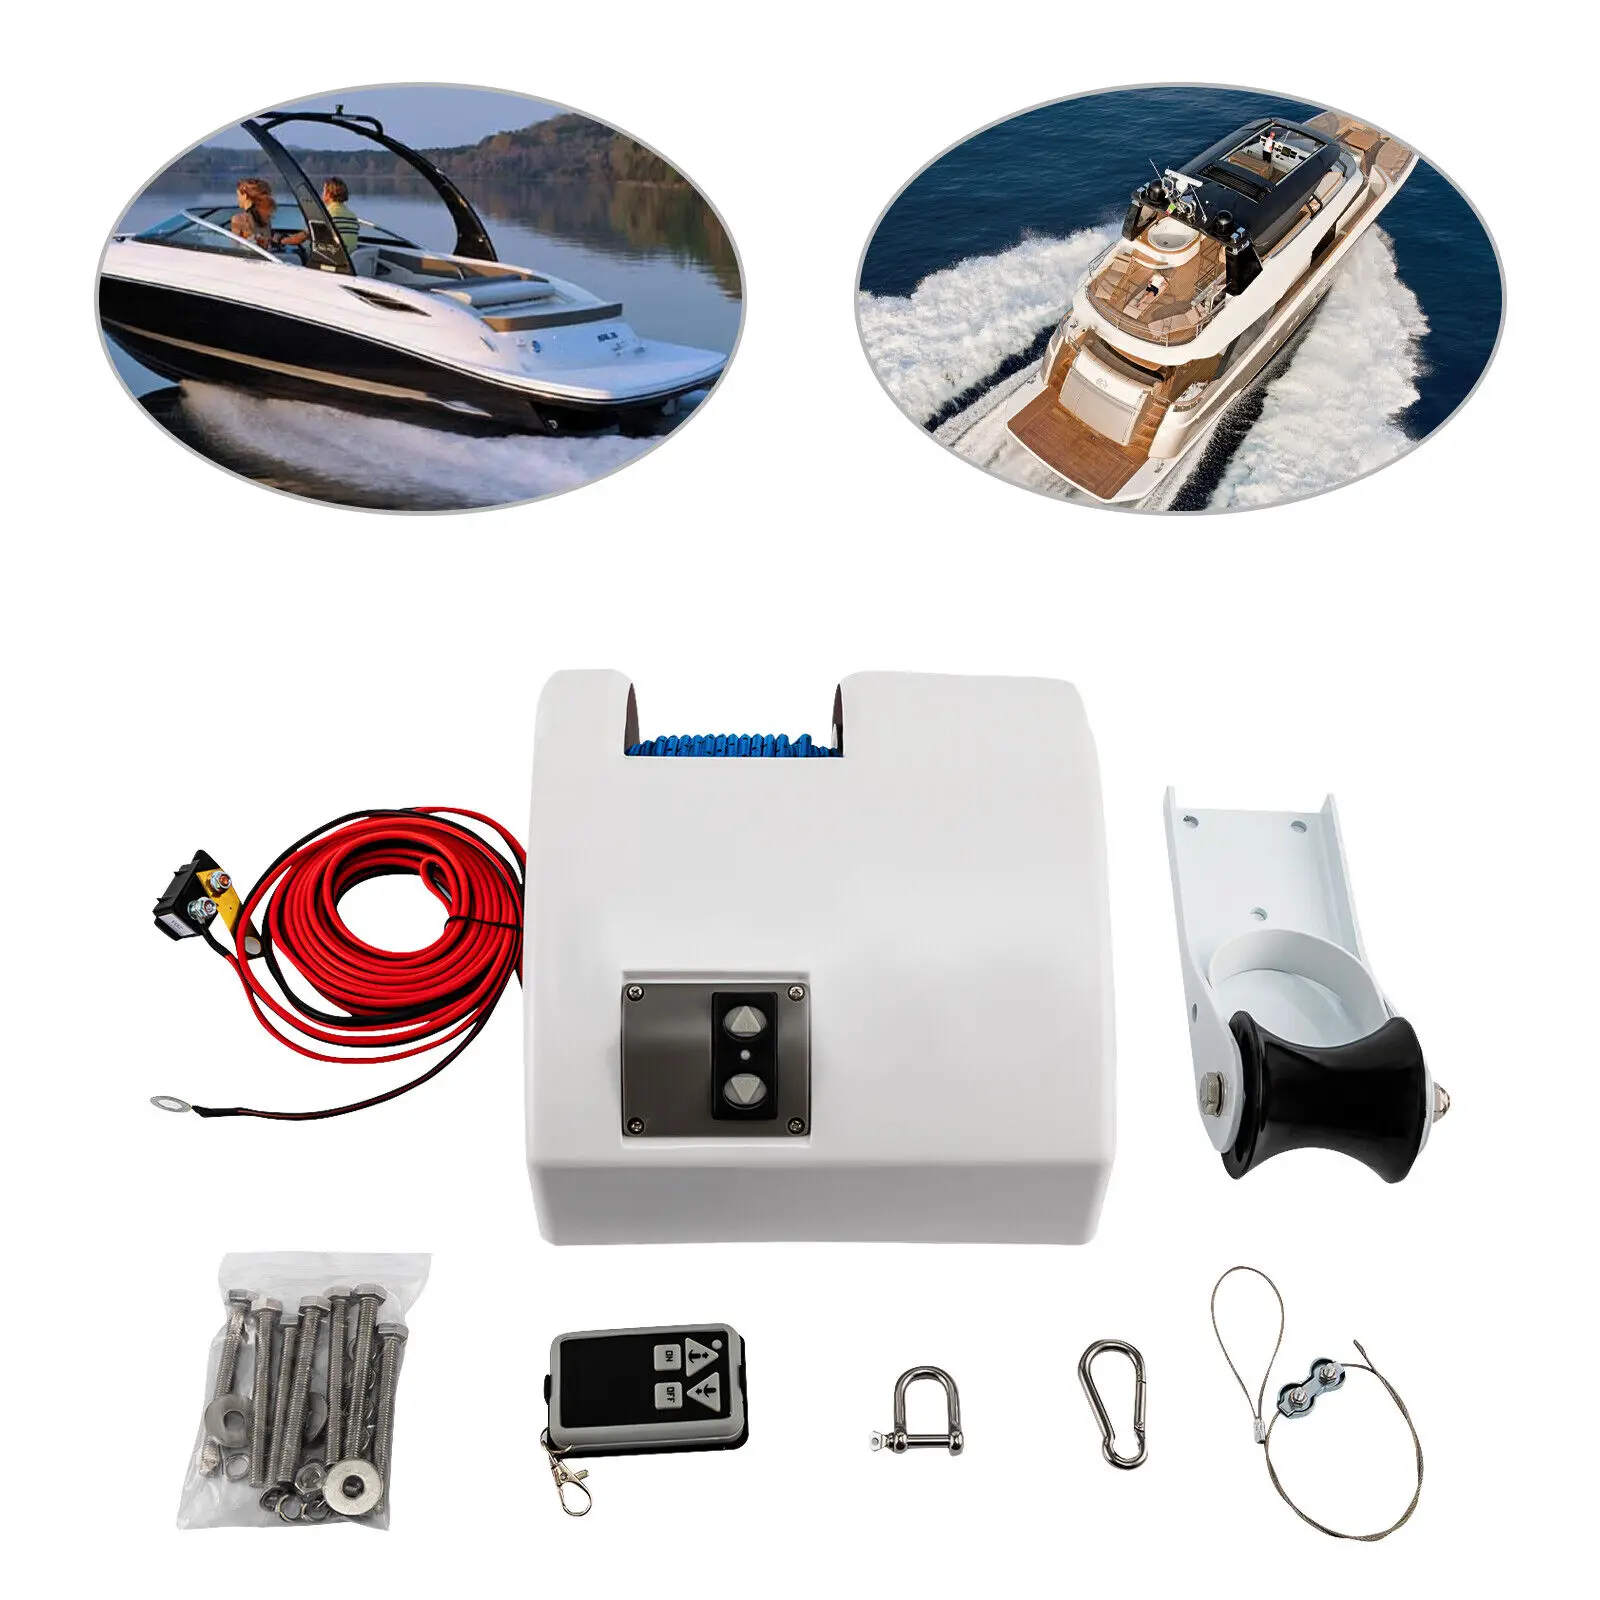 12V  25LBS Boat Marine Electric Windlass Anchor Winch W/Wireless Remote Control wireless remote control switch kit anchor winch windlass controller for marine boat pontoon